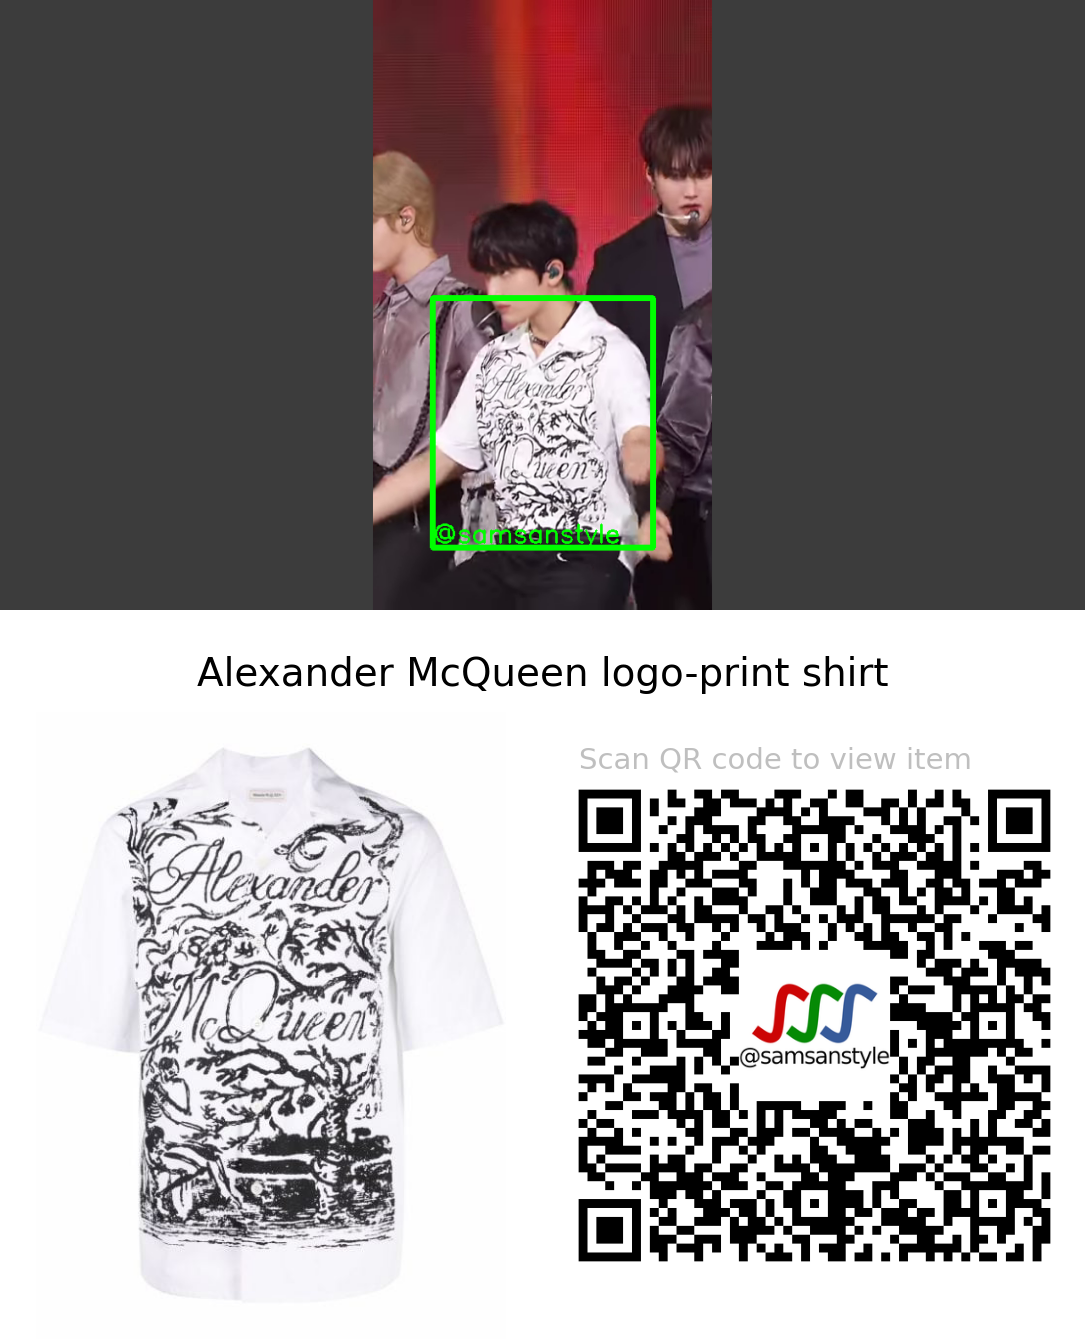 BLANK2Y DK | FUEGO SBS MTV The Show | Alexander McQueen logo-print shirt